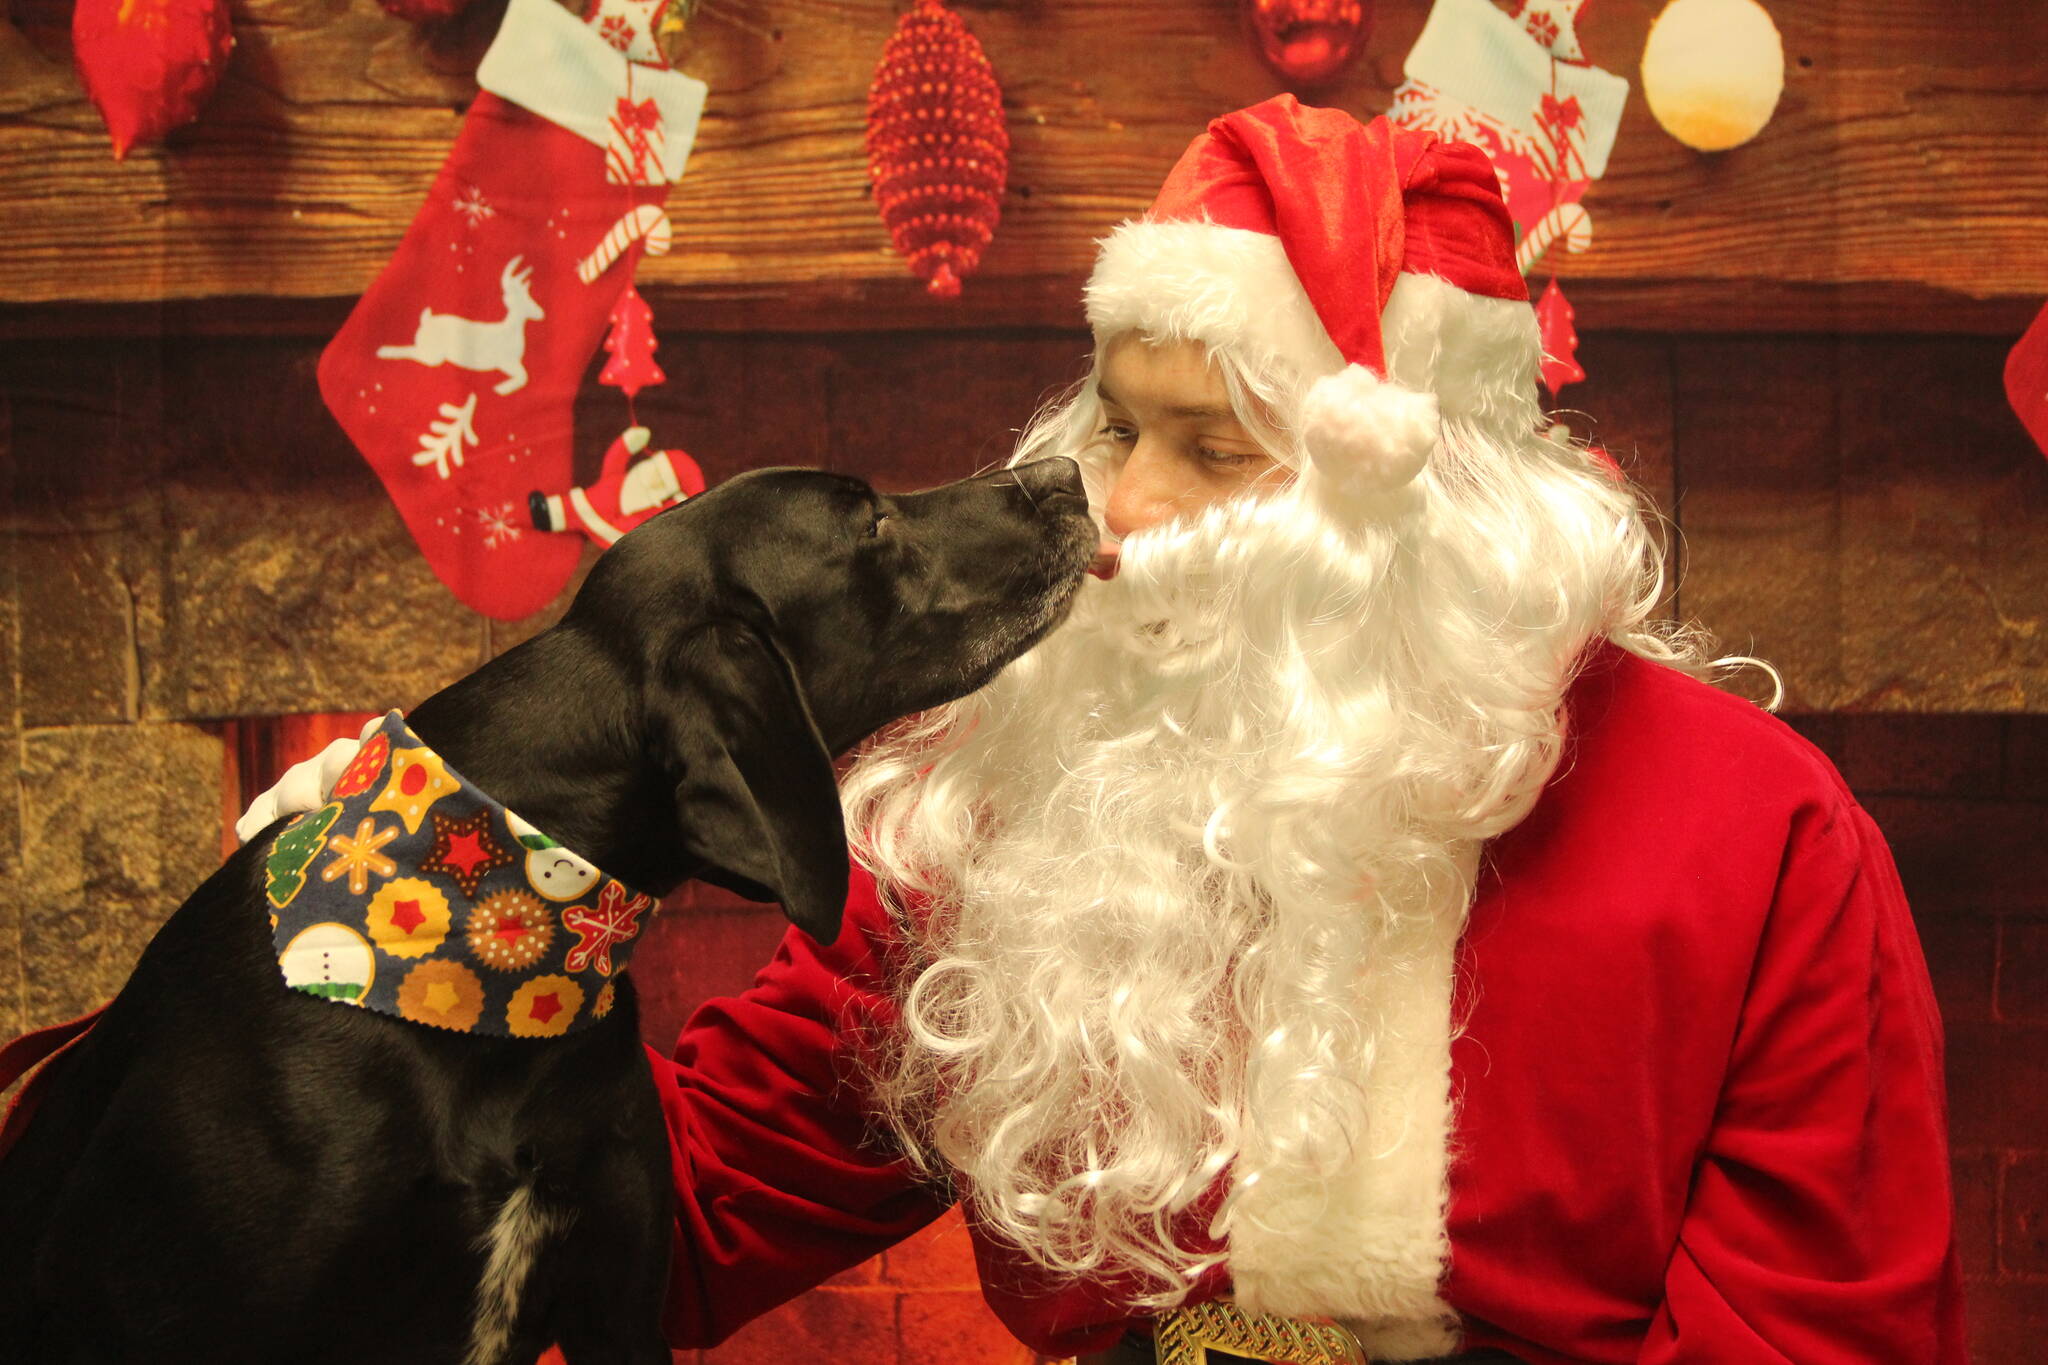 Photo by Karina Andrew/Whidbey News-Times
Nova gives Santa Claus a kiss during a holiday photo.